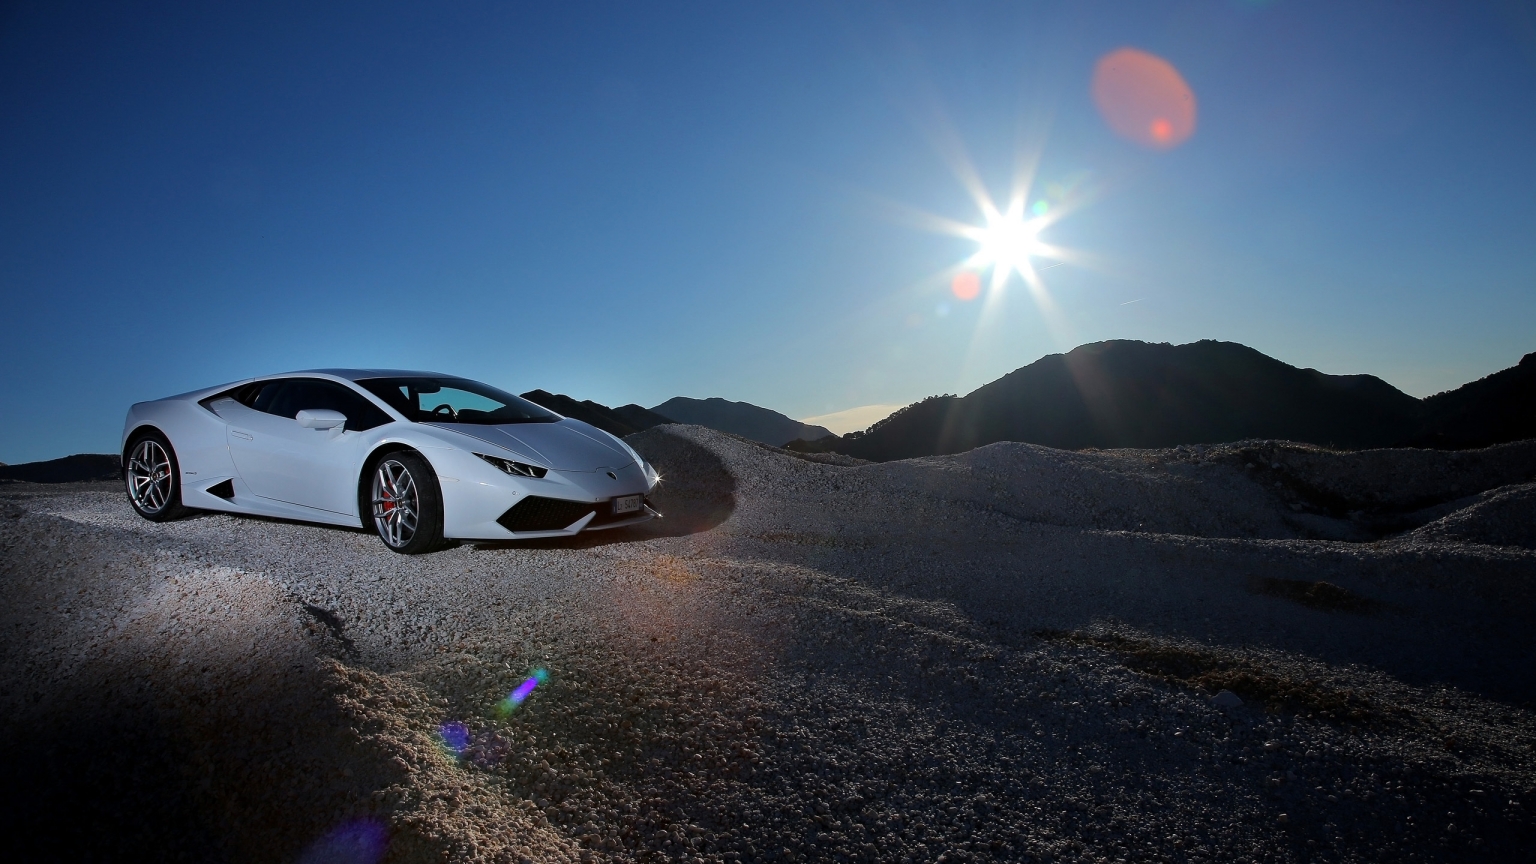 Lamborghini Huracan Sunset for 1536 x 864 HDTV resolution